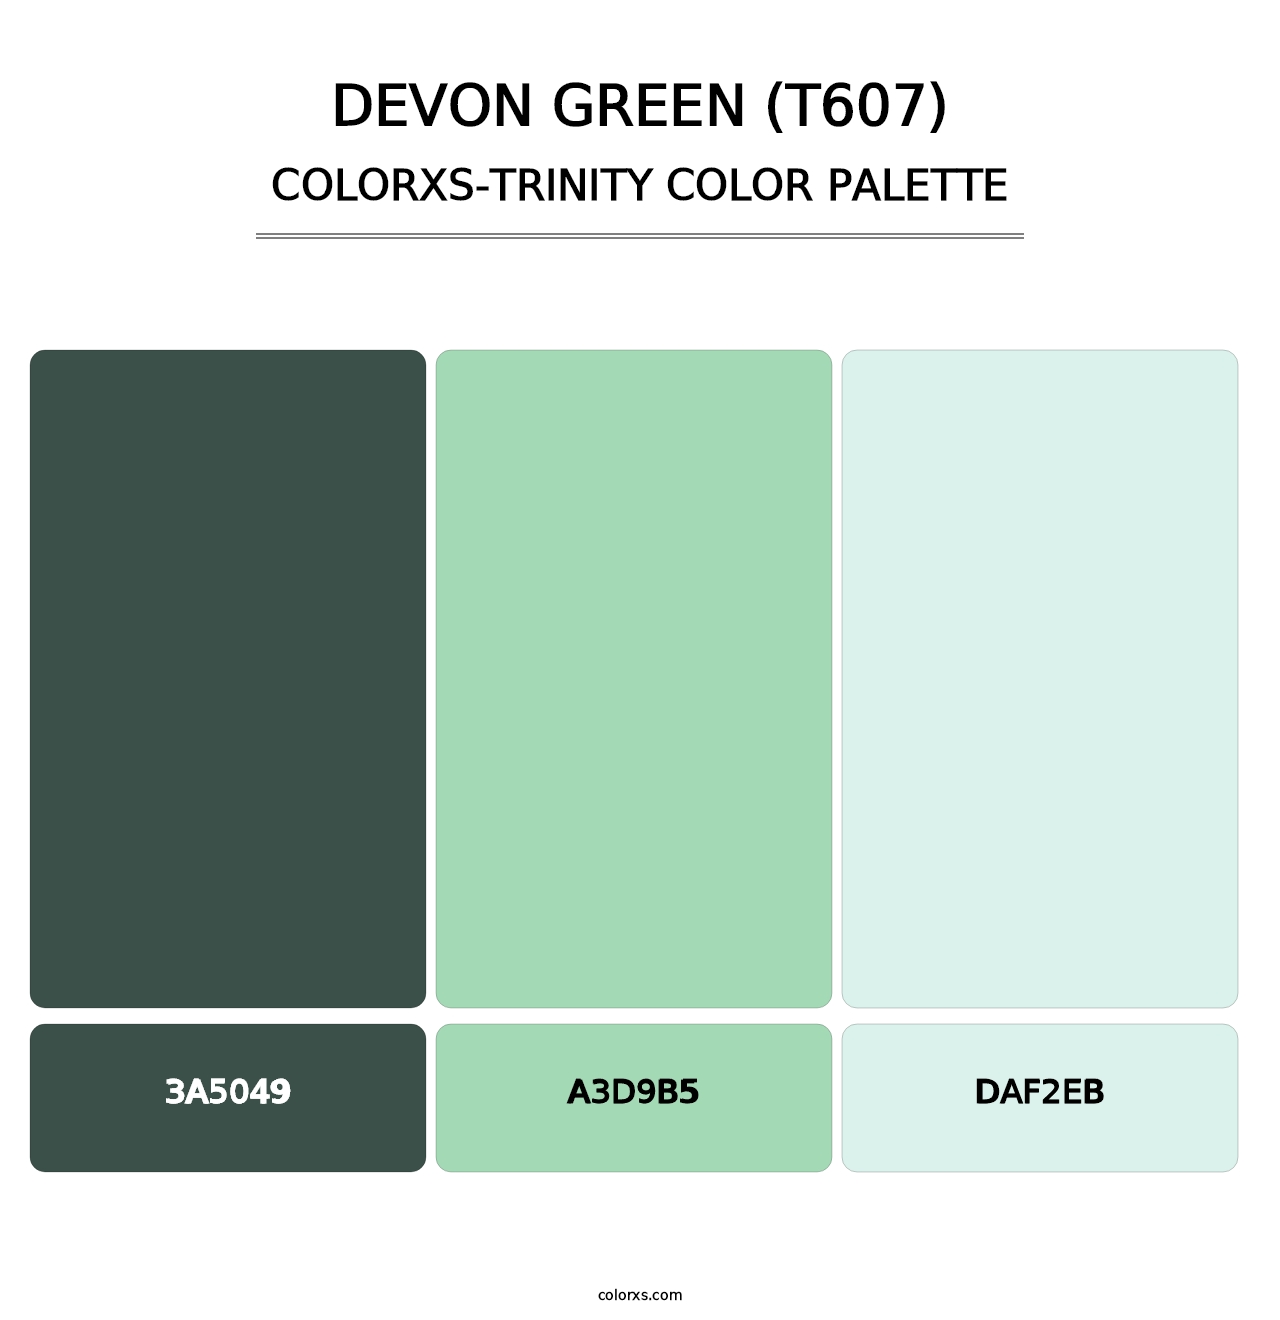 Devon Green (T607) - Colorxs Trinity Palette